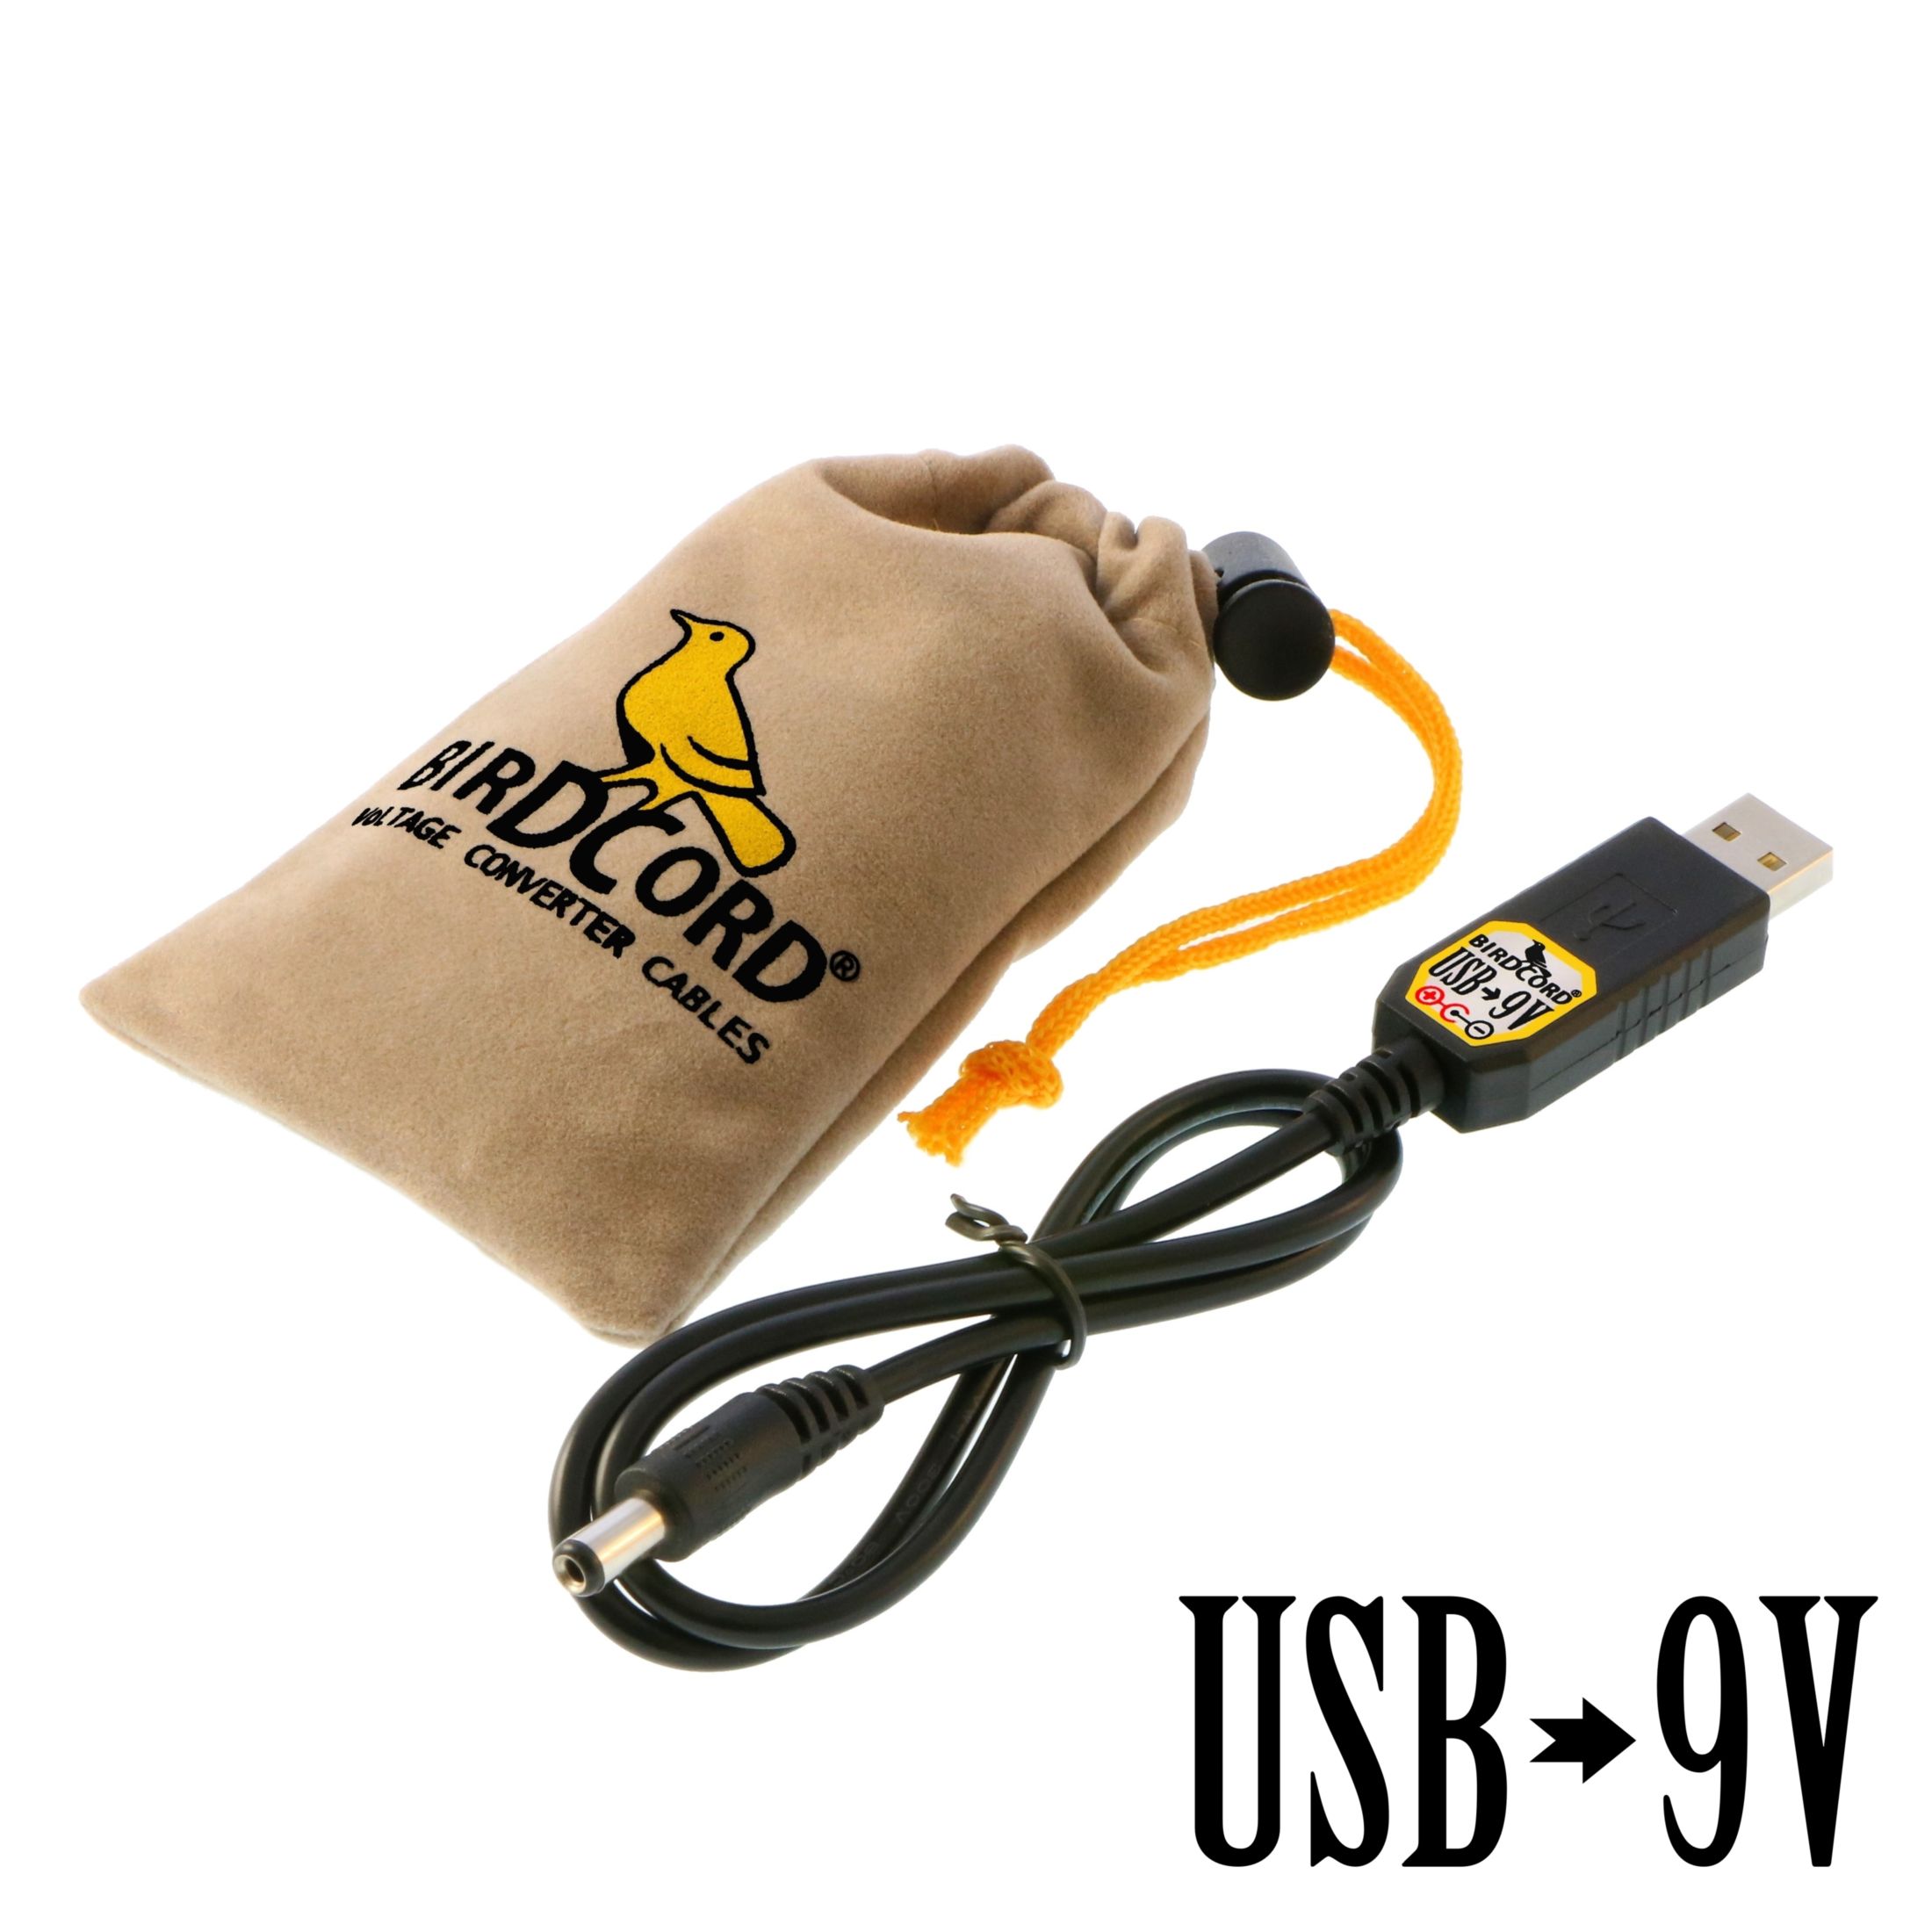 Birdcord USB to 9V Converter Cable